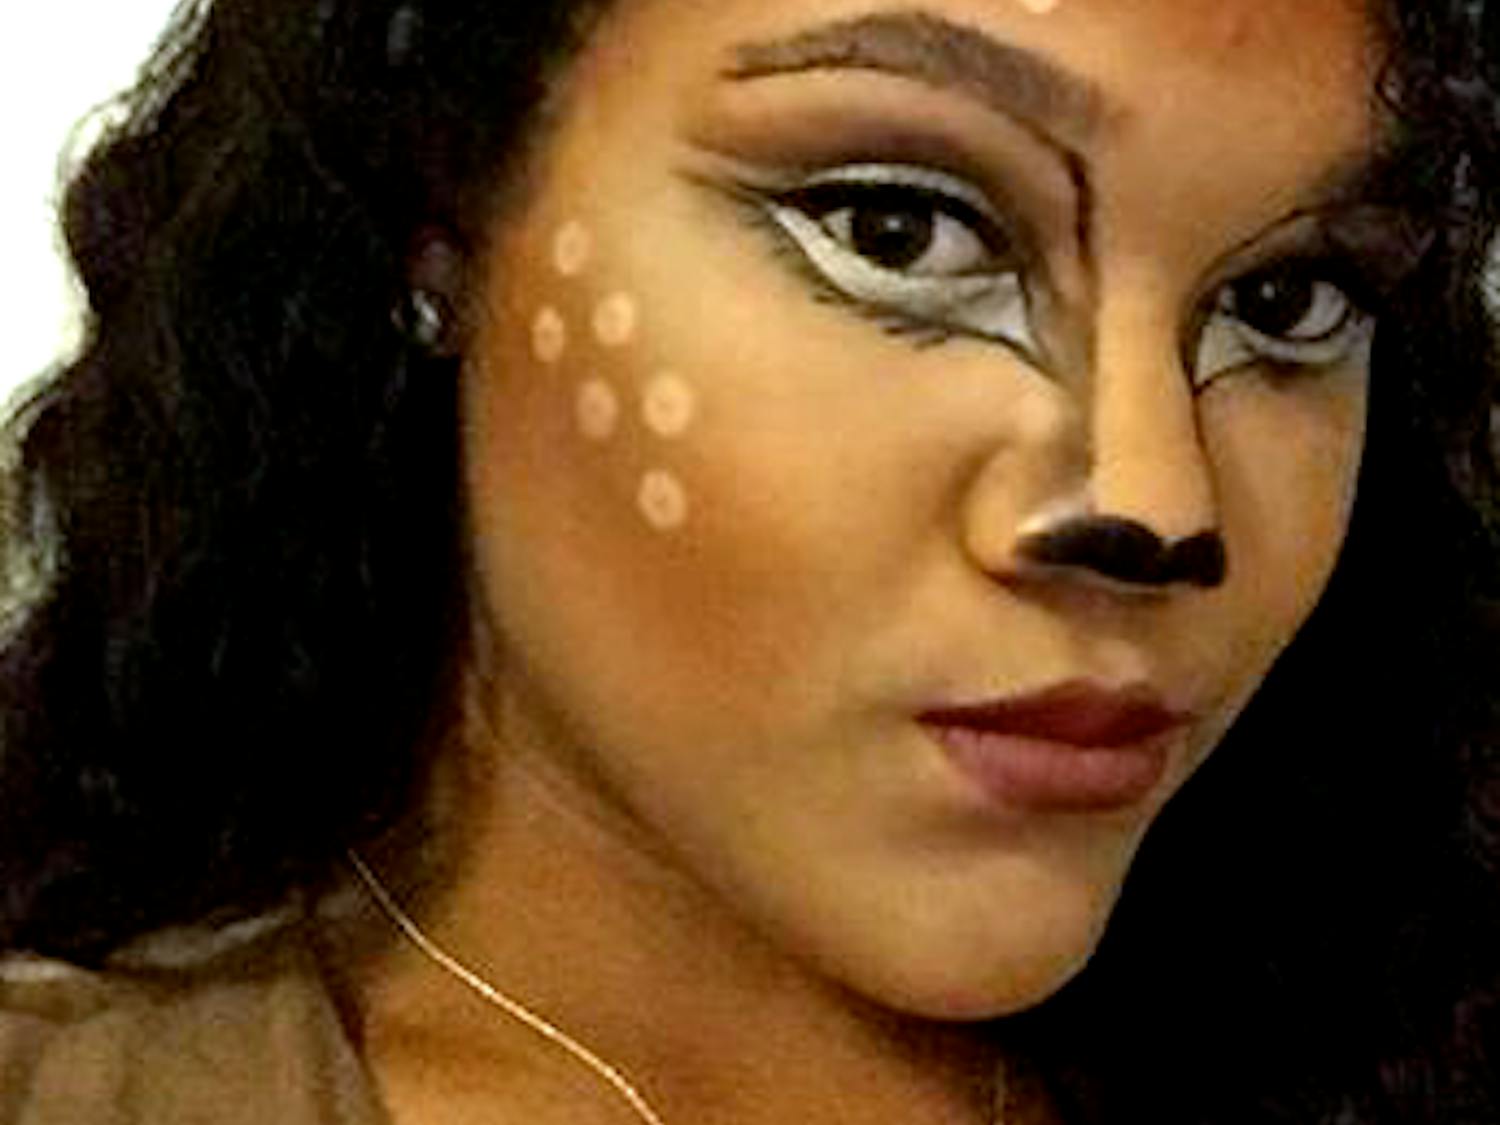 Tierra Bascomb (@Tierra_Tee) did her makeup to create a&nbsp;fawn look.